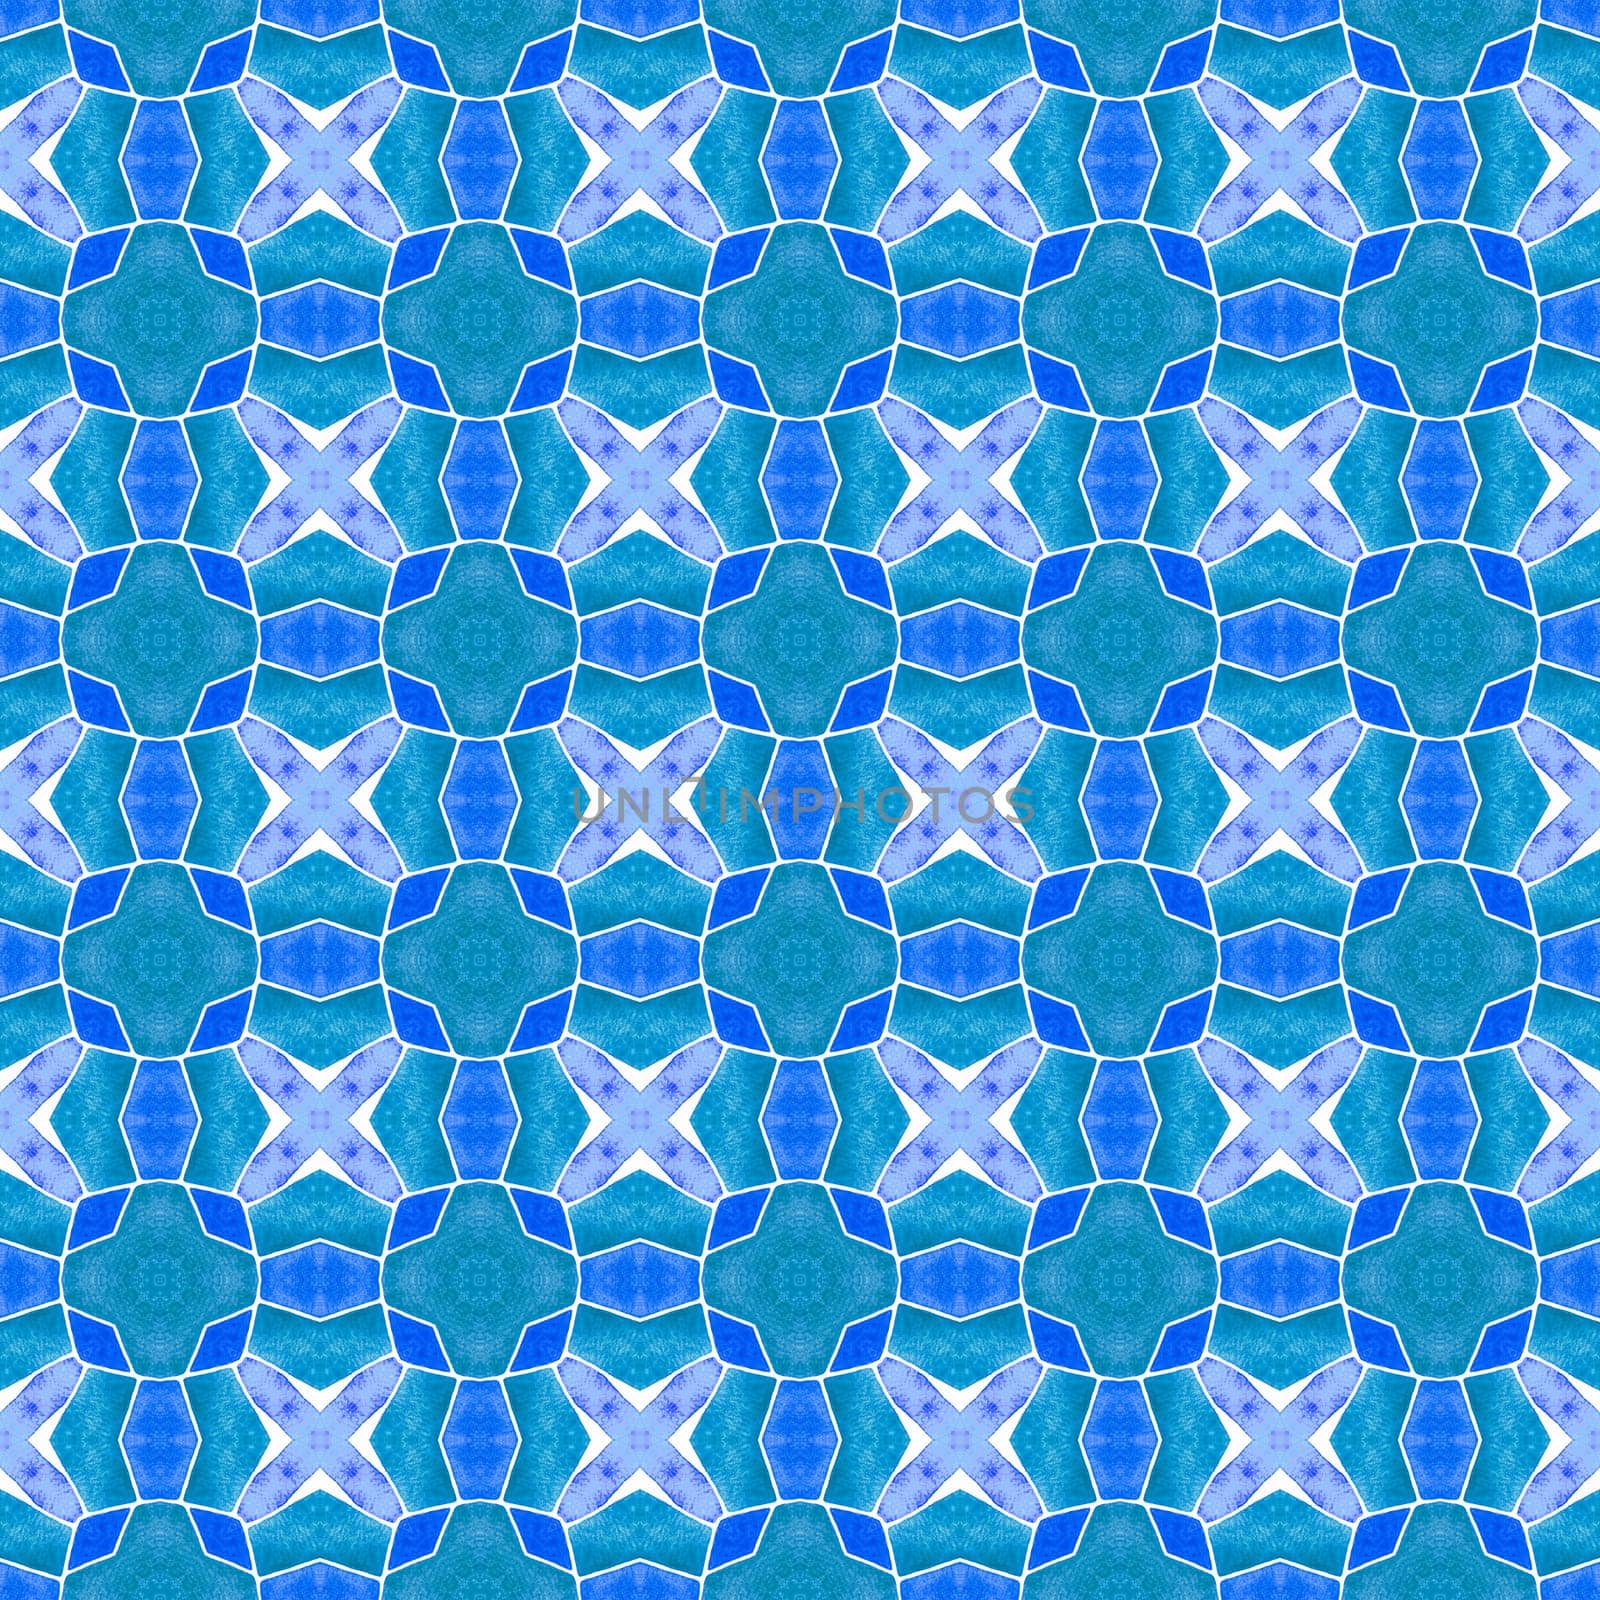 Textile ready magnetic print, swimwear fabric, wallpaper, wrapping. Blue likable boho chic summer design. Chevron watercolor pattern. Green geometric chevron watercolor border.